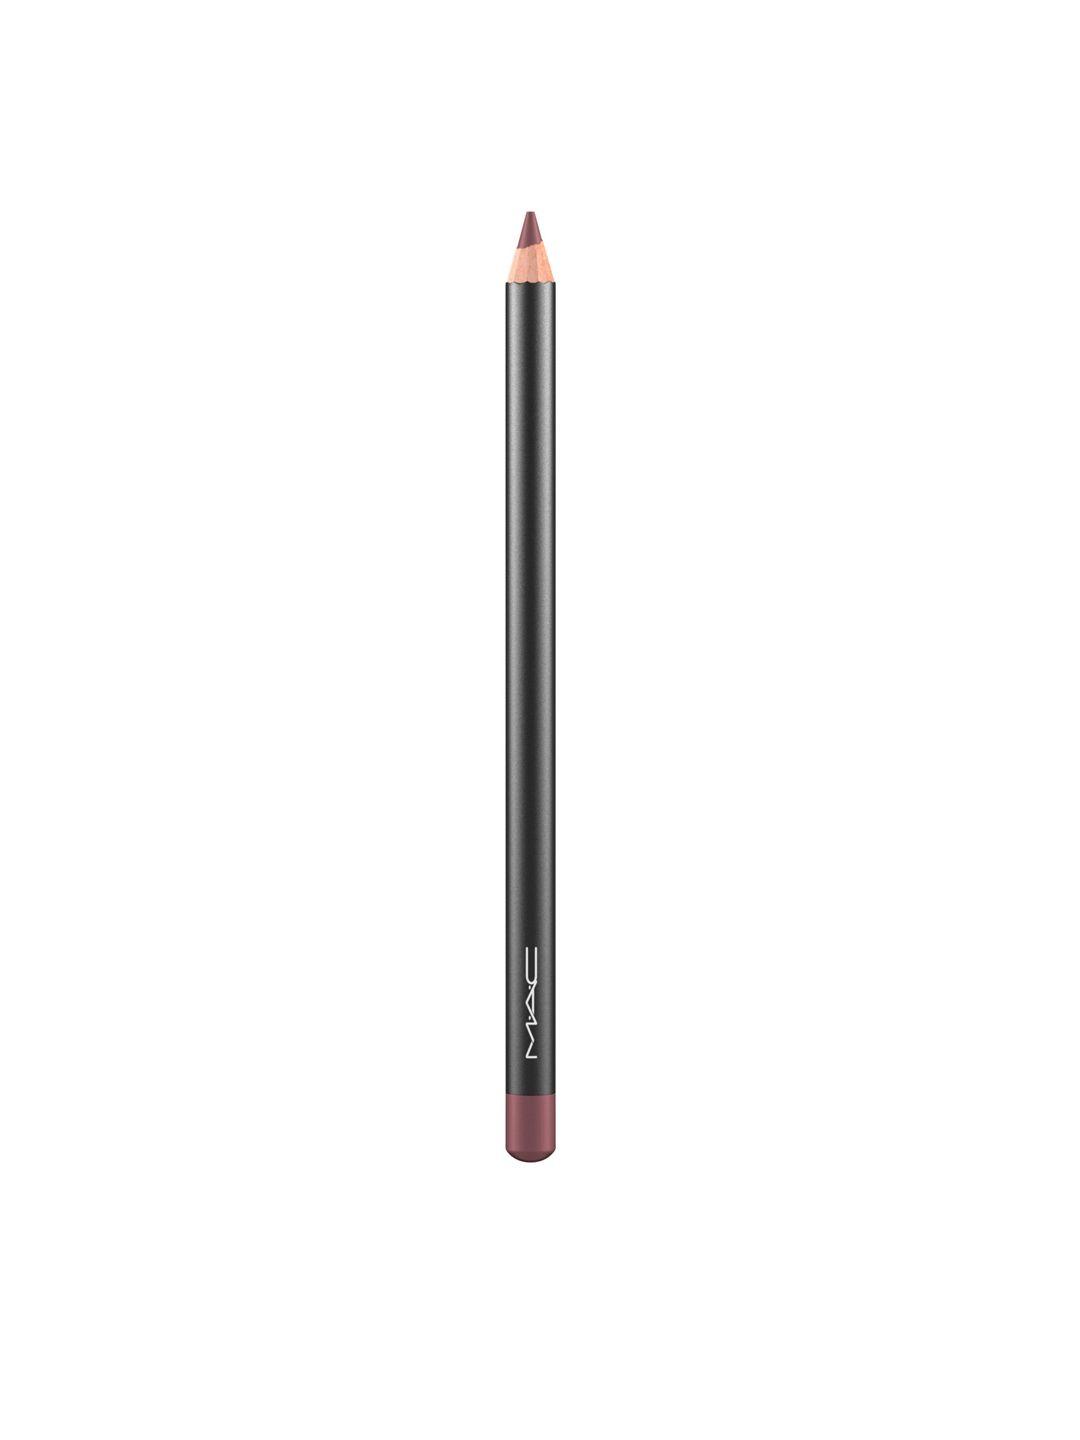 m.a.c longwear tansfer proof lip liner pencil - plum 1.45 g